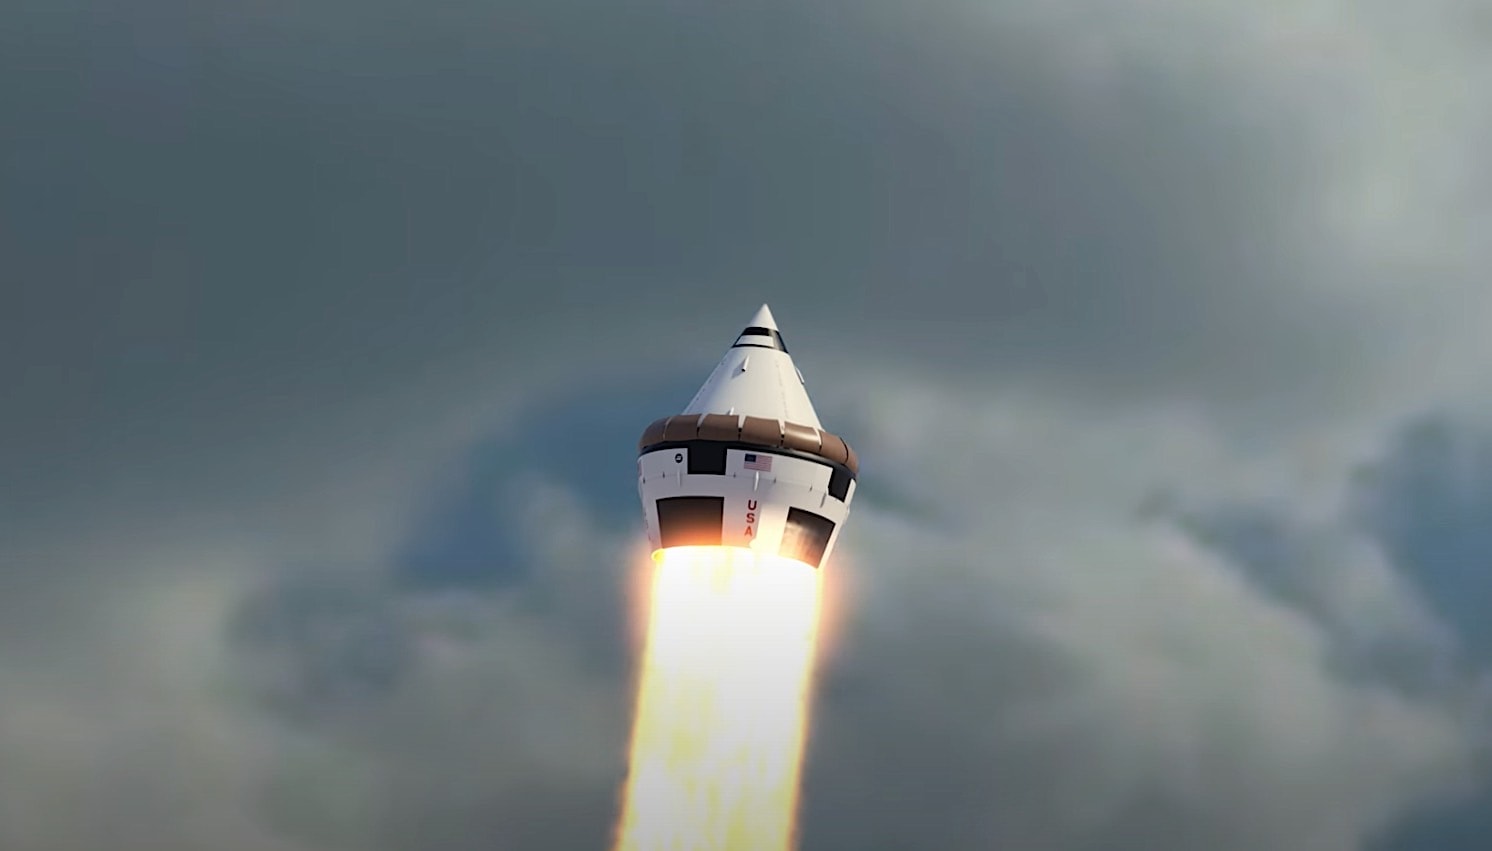 Martin Renova Innovative Airbreathing Rocket Concept Explained